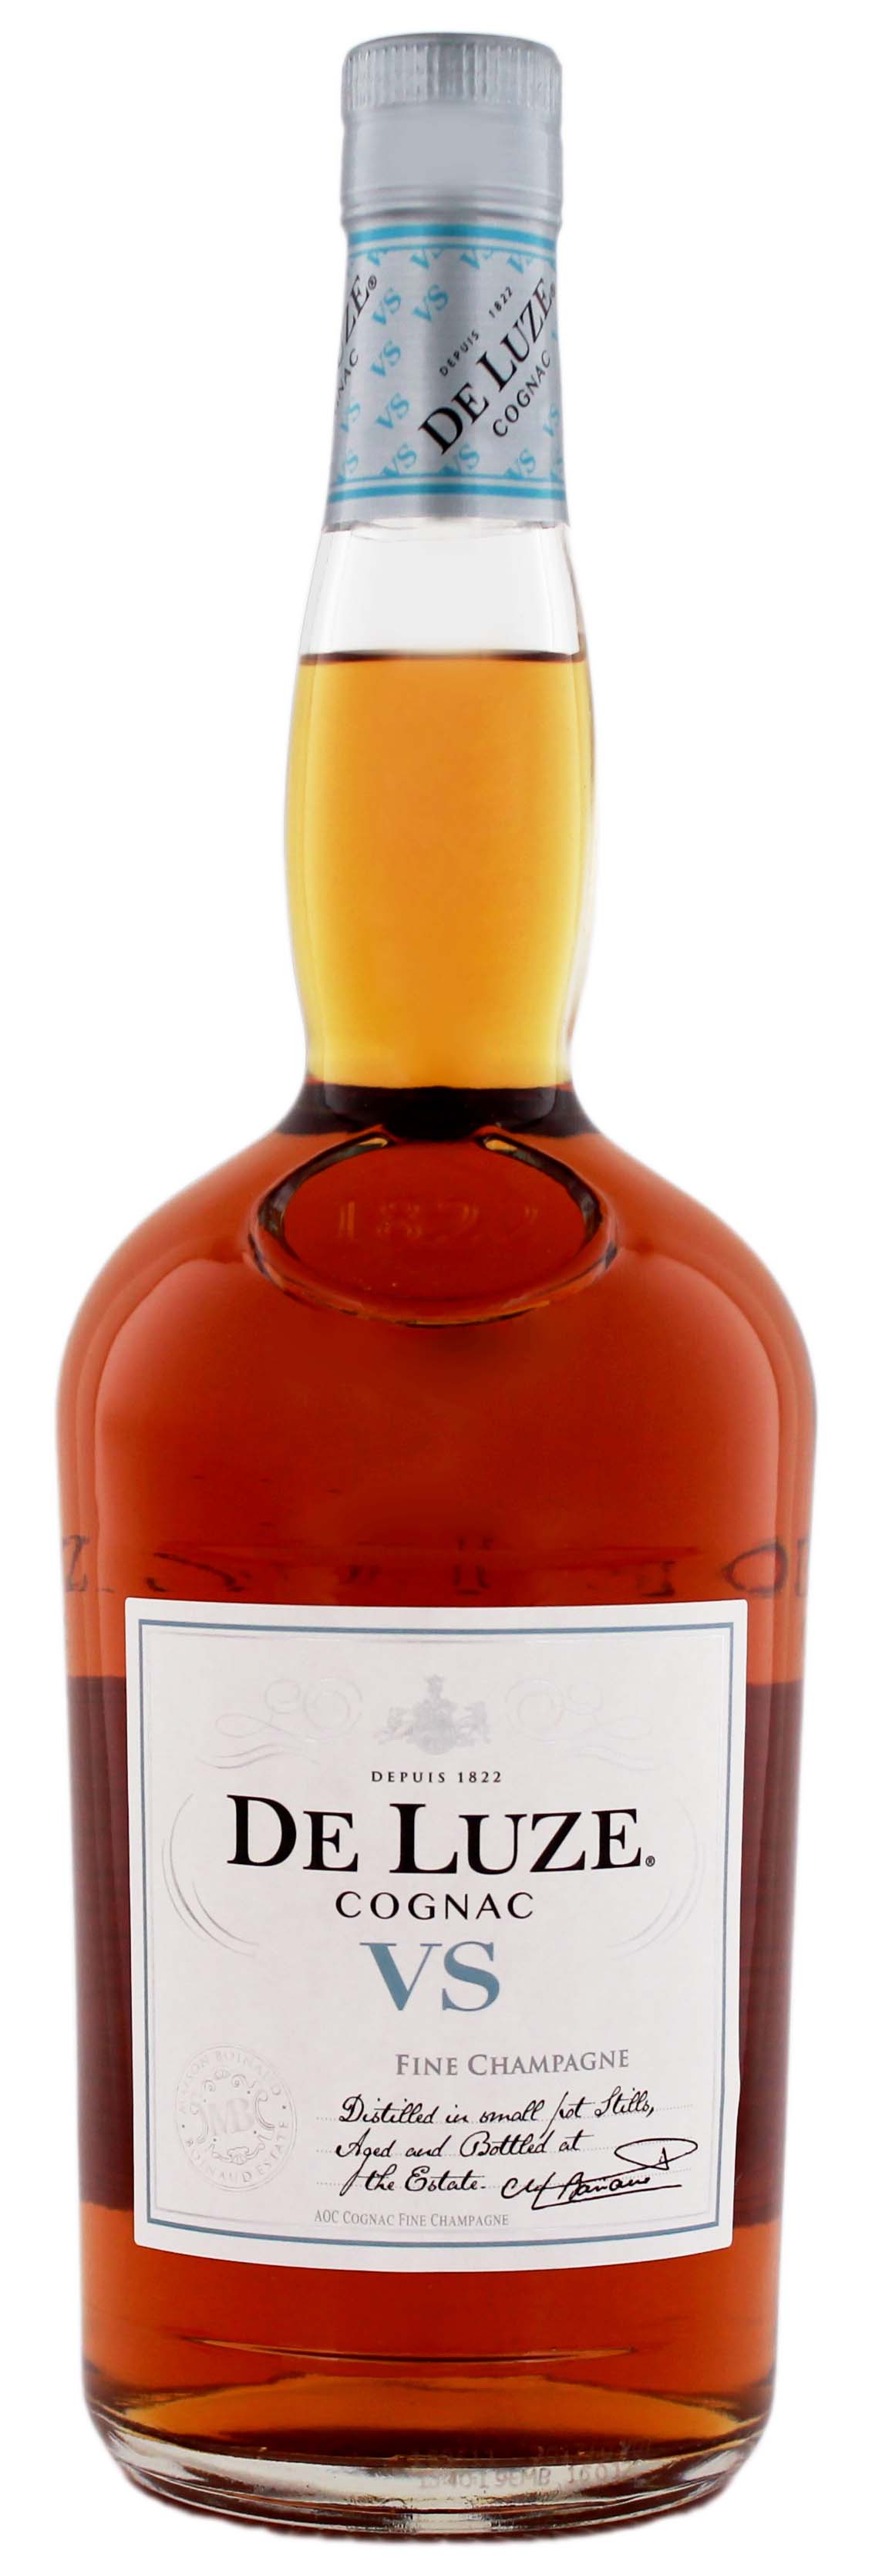 Cognac De Luze VS Shop online Drinkology im ! kaufen jetzt